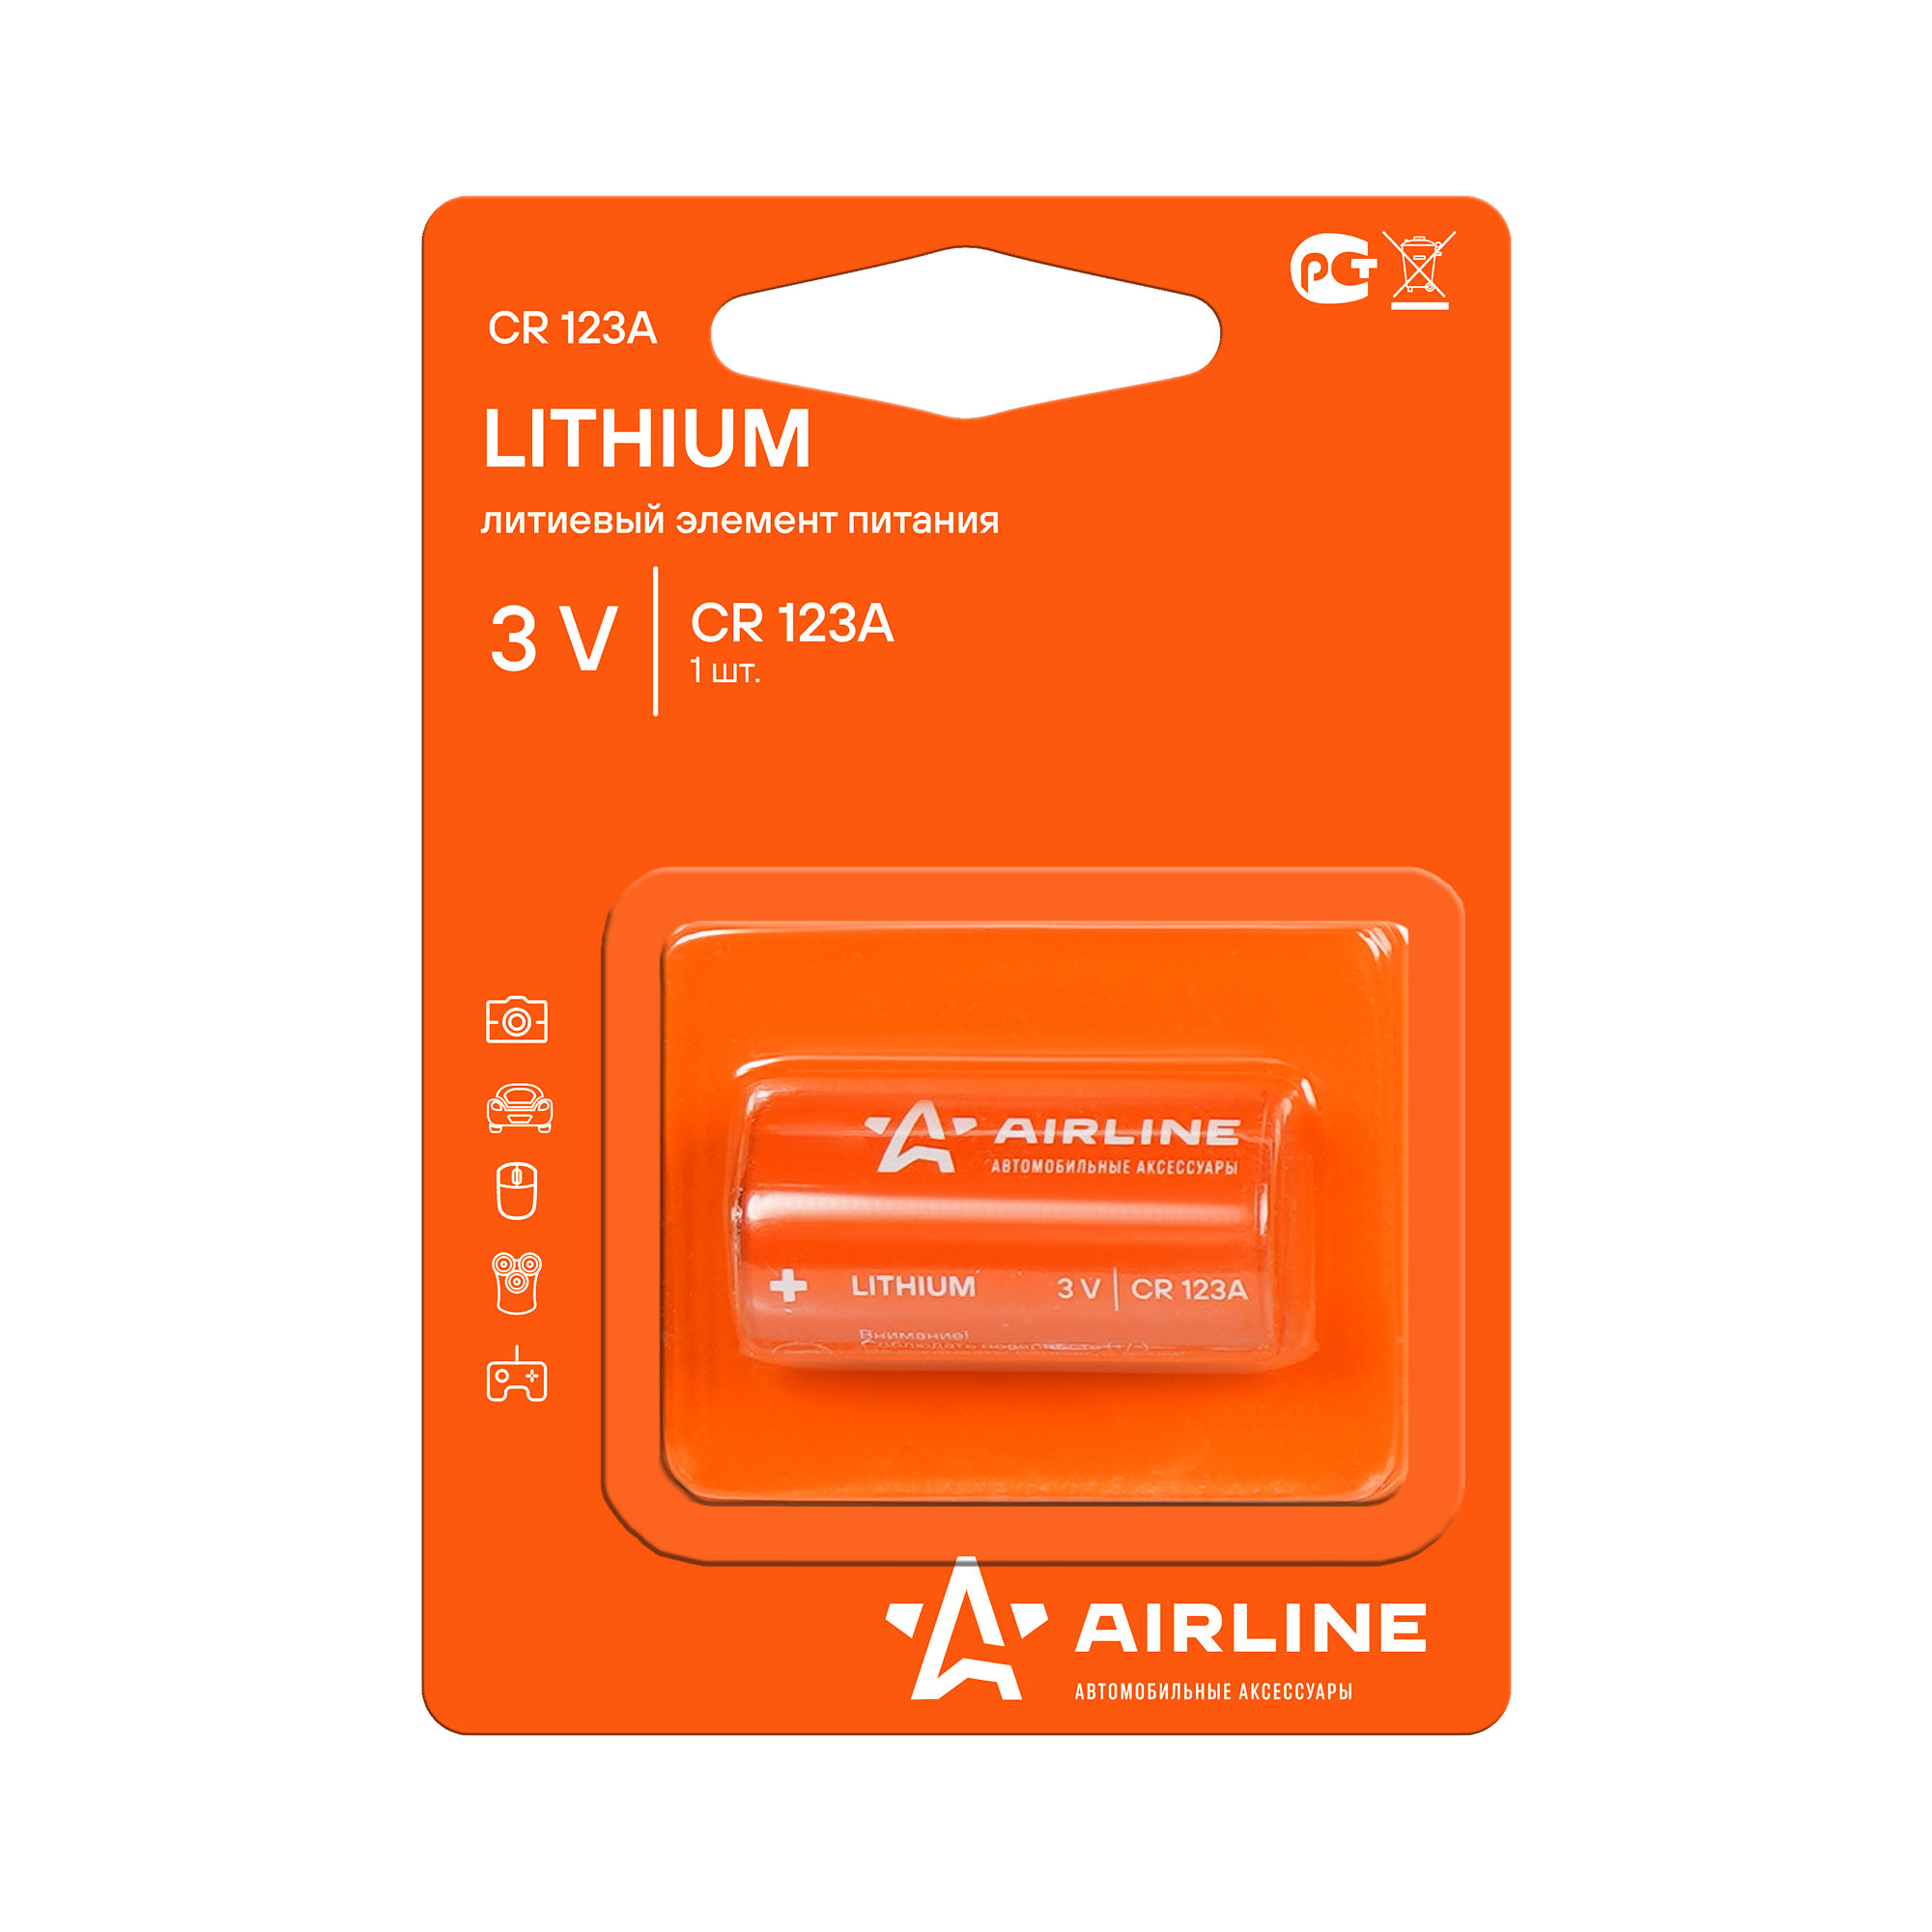 Батарейка литиевая AIRLINE Lithium CR123A 3V упаковка 1 шт. CR123A-01 литиевая батарейка airline